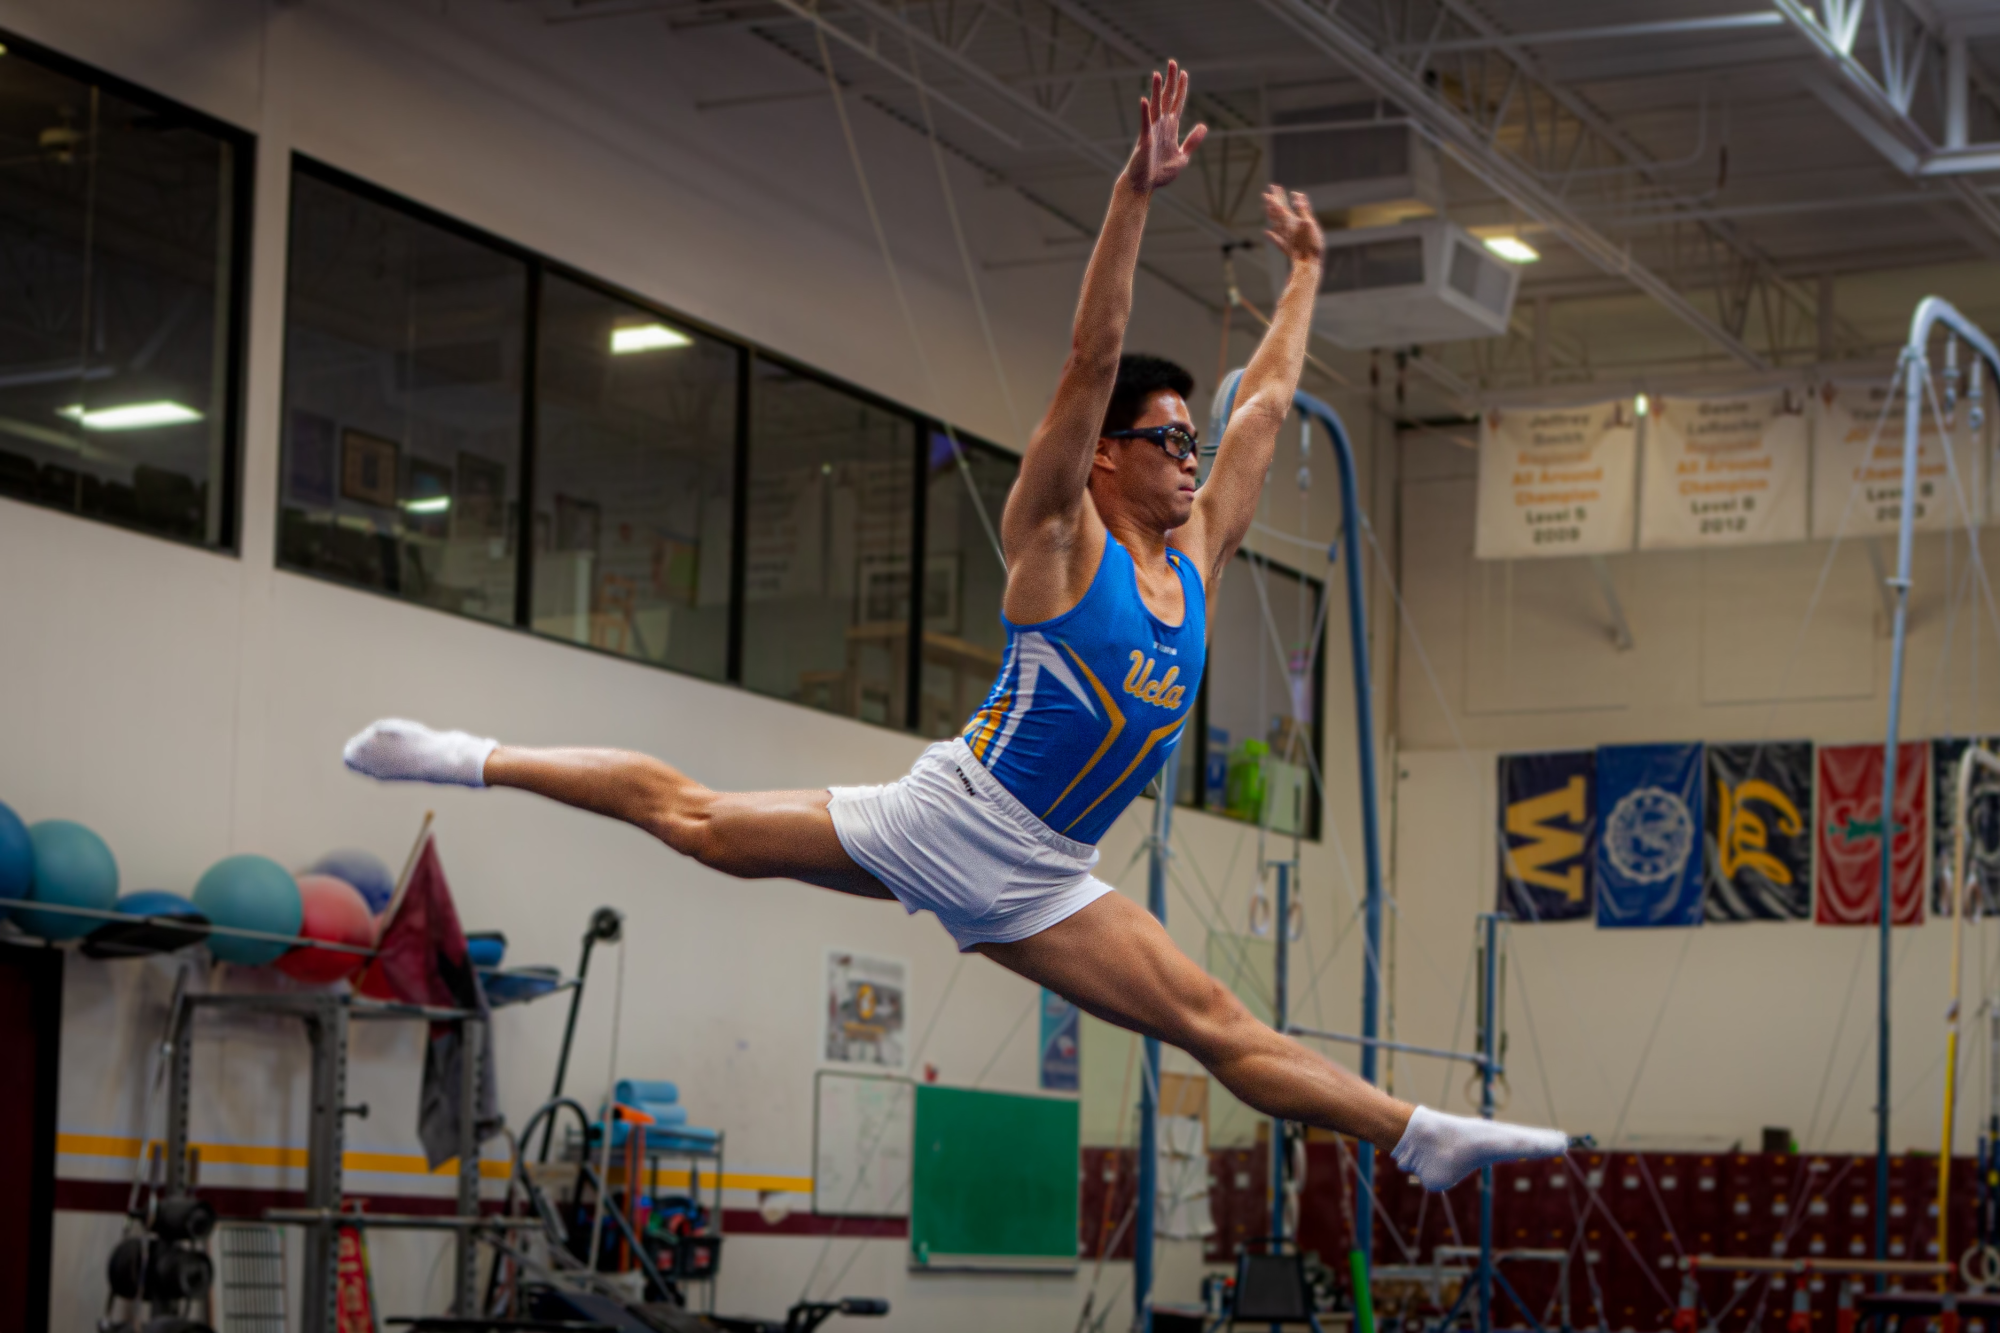 UCLA gymnastics enthusiast Josh Lim performs an exercise routine on the club floor.